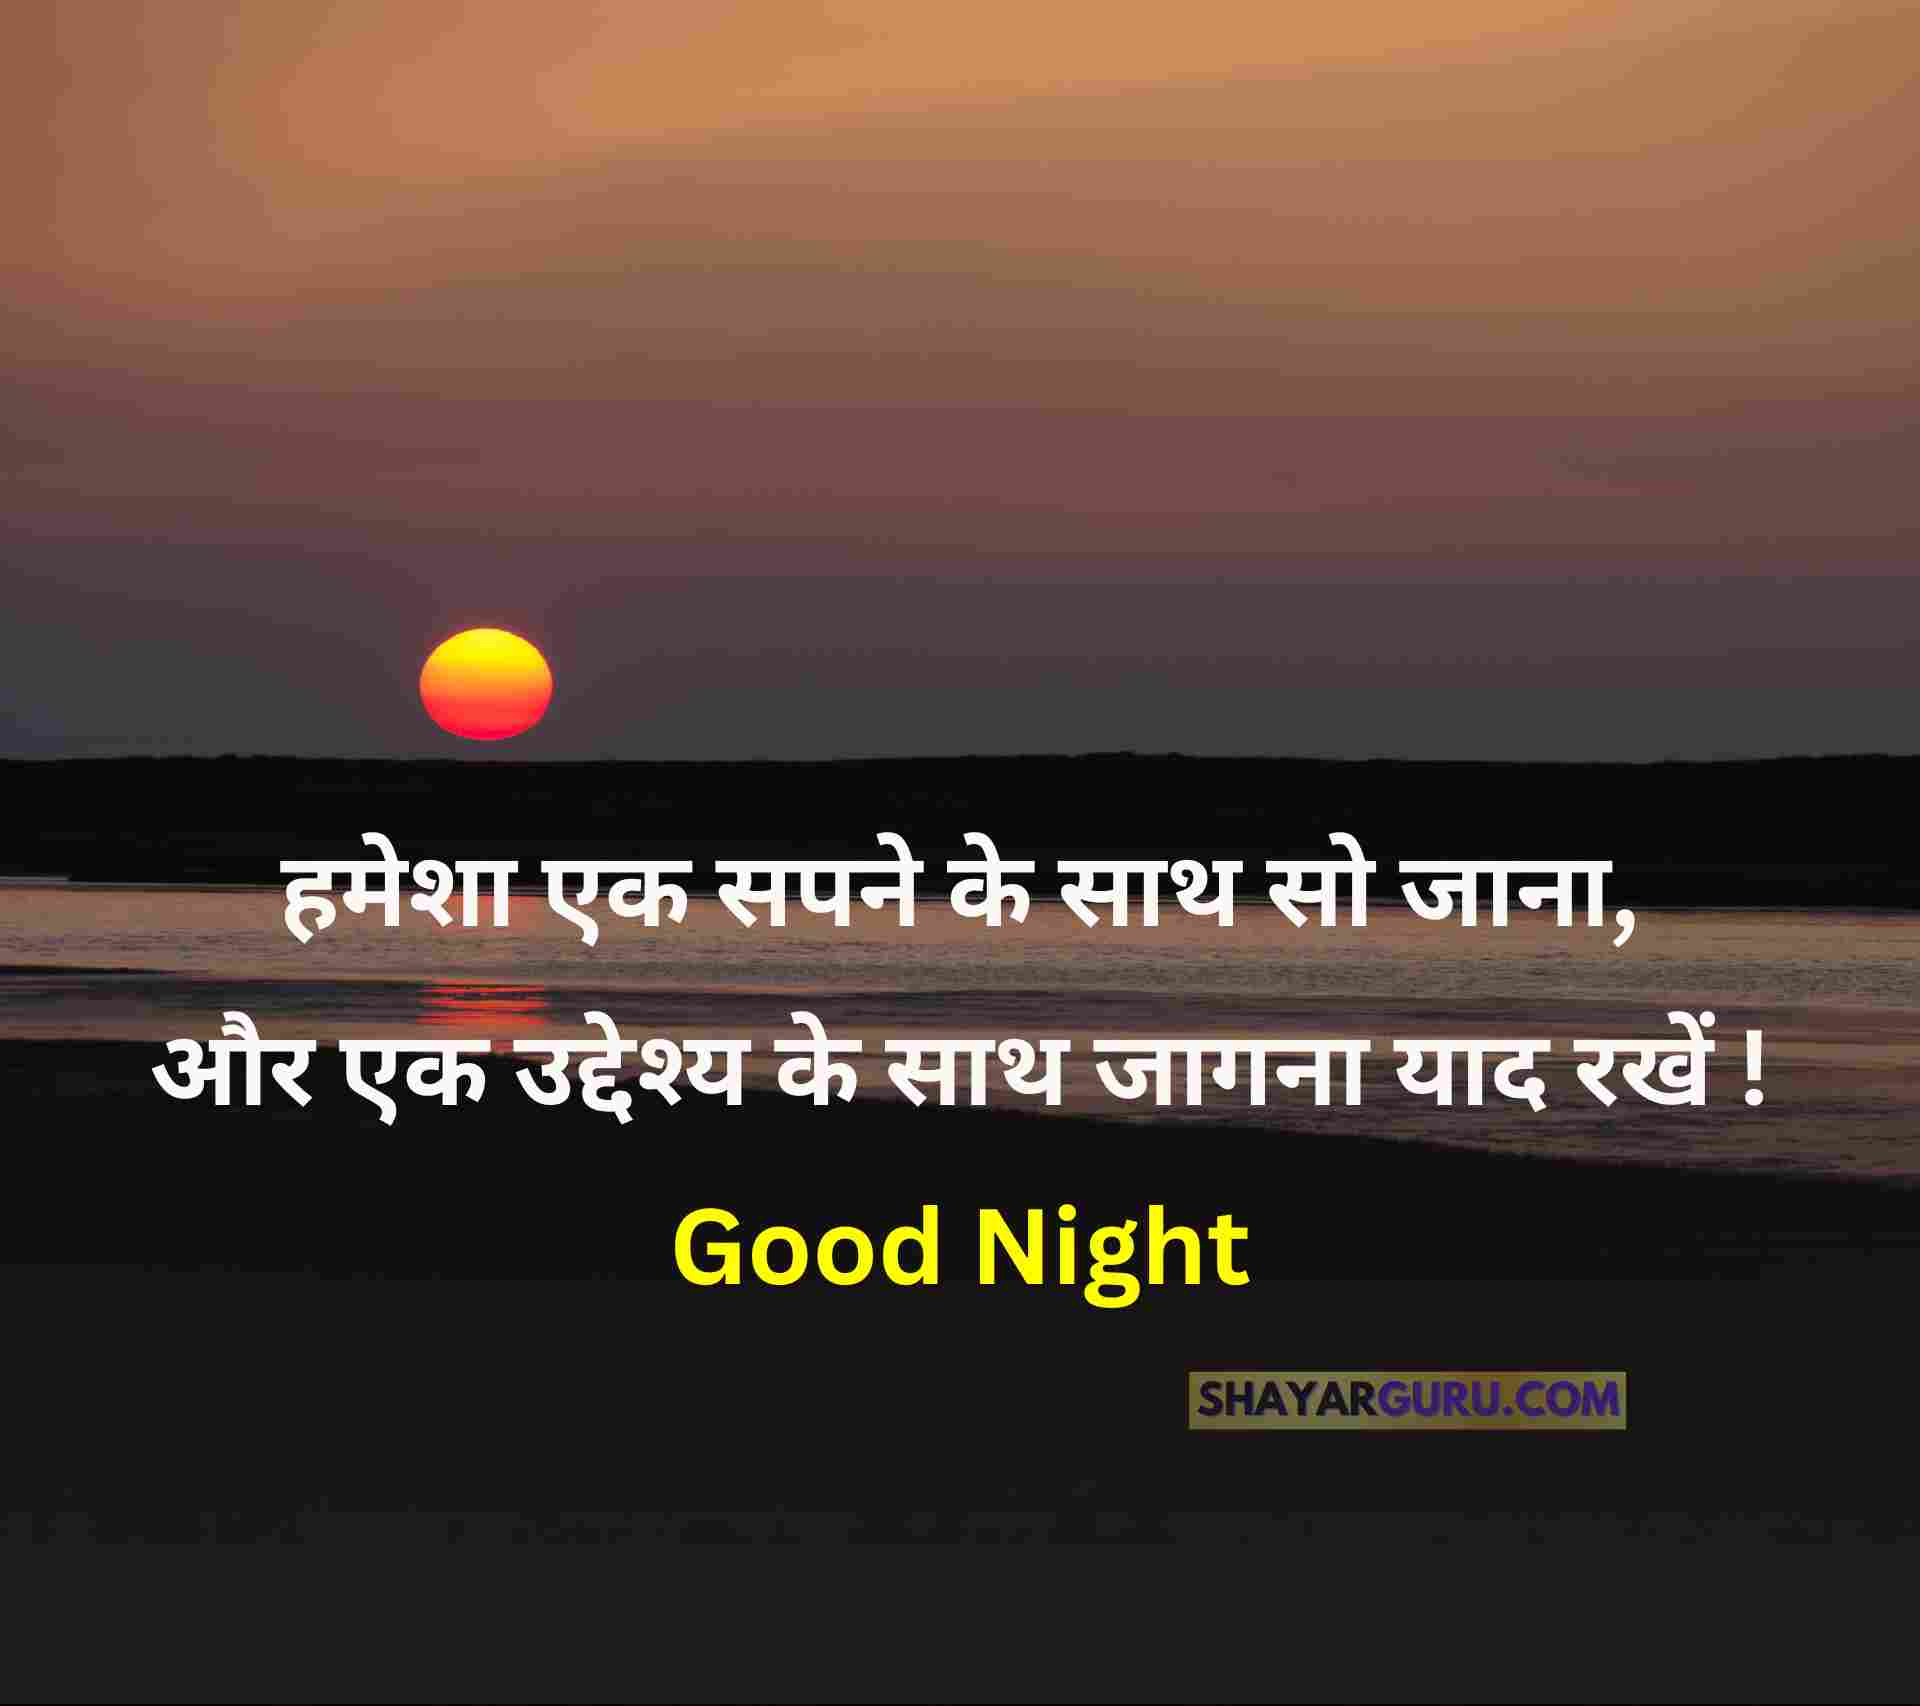 Good Night Quotes in Hindi Image